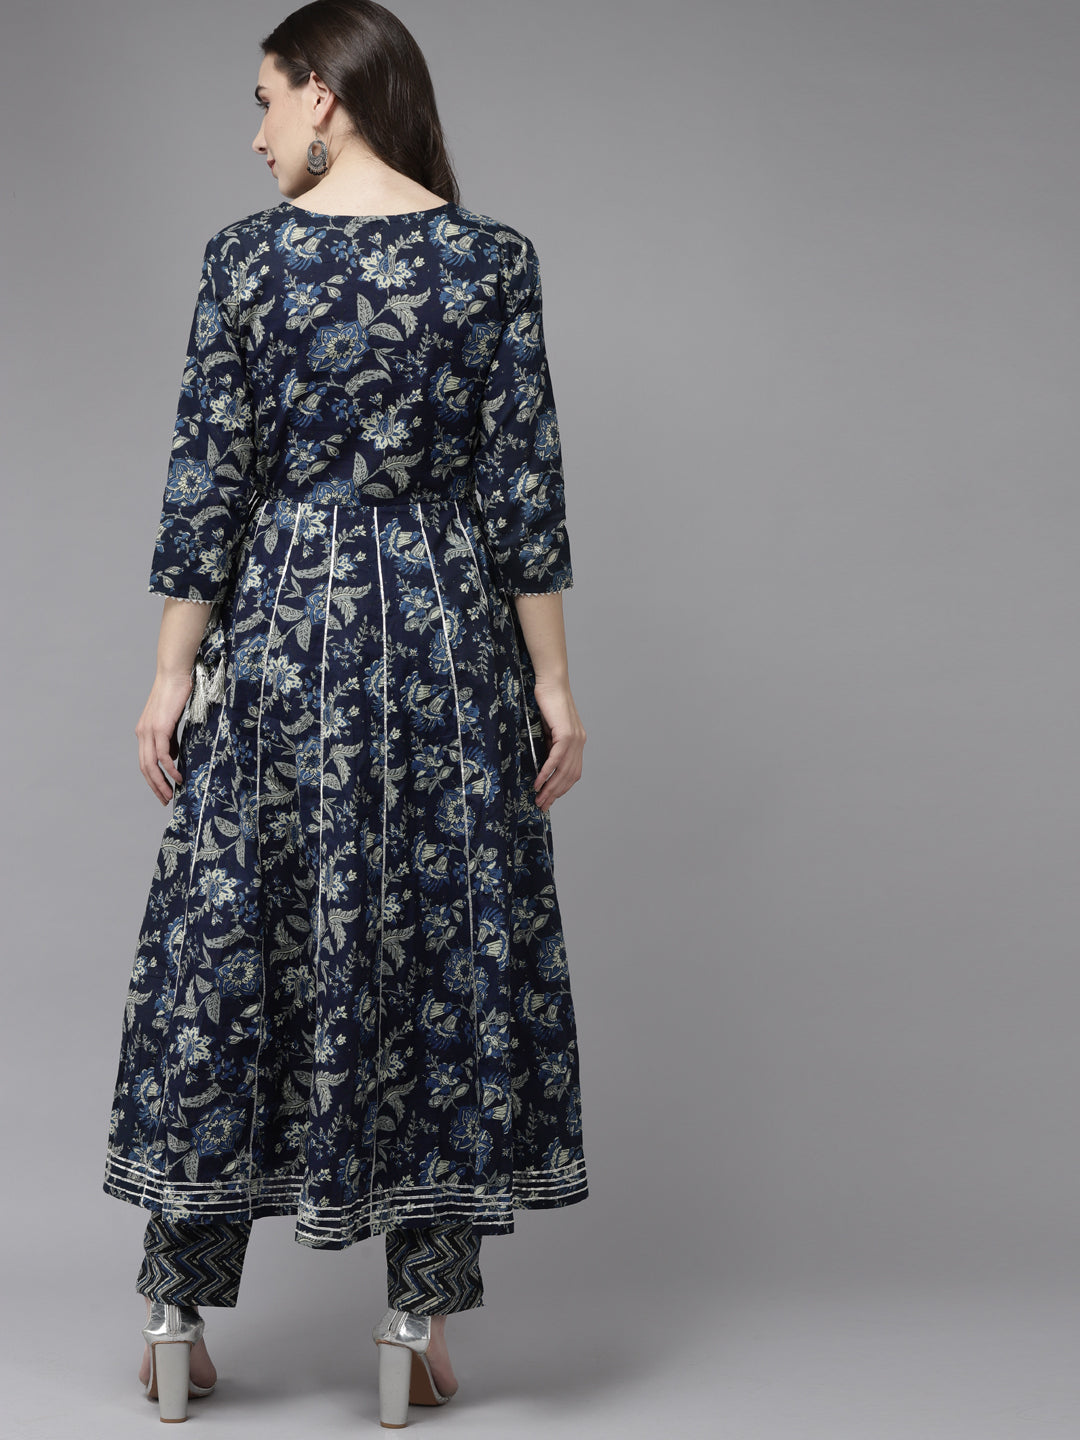 Ishin Women's Cotton Blend Navy Blue Embroidered Anarkali Kurta Trouser Set